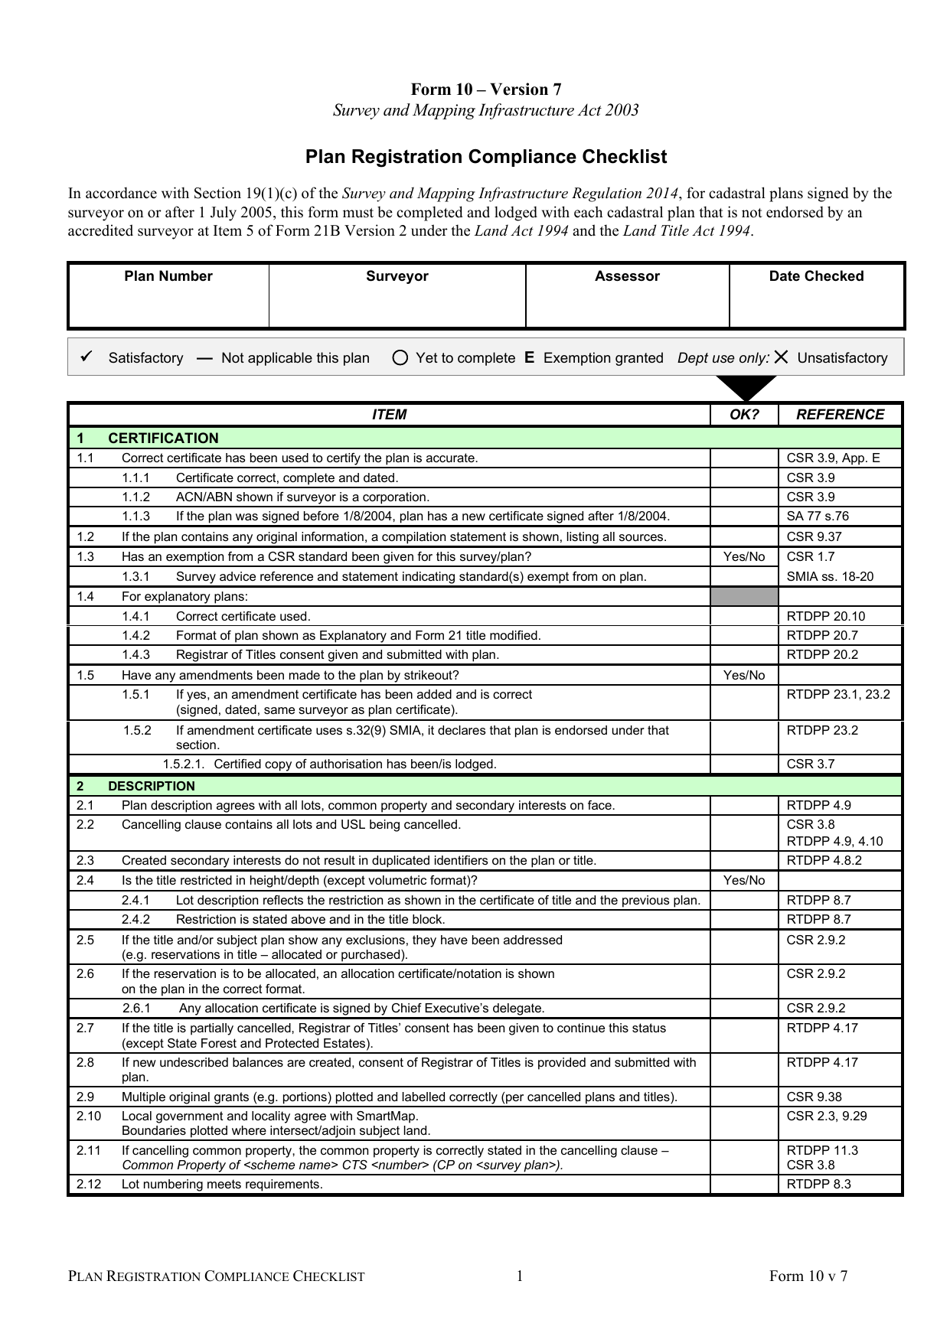 Form 10 Plan Registration Compliance Checklist - Queensland, Australia, Page 1